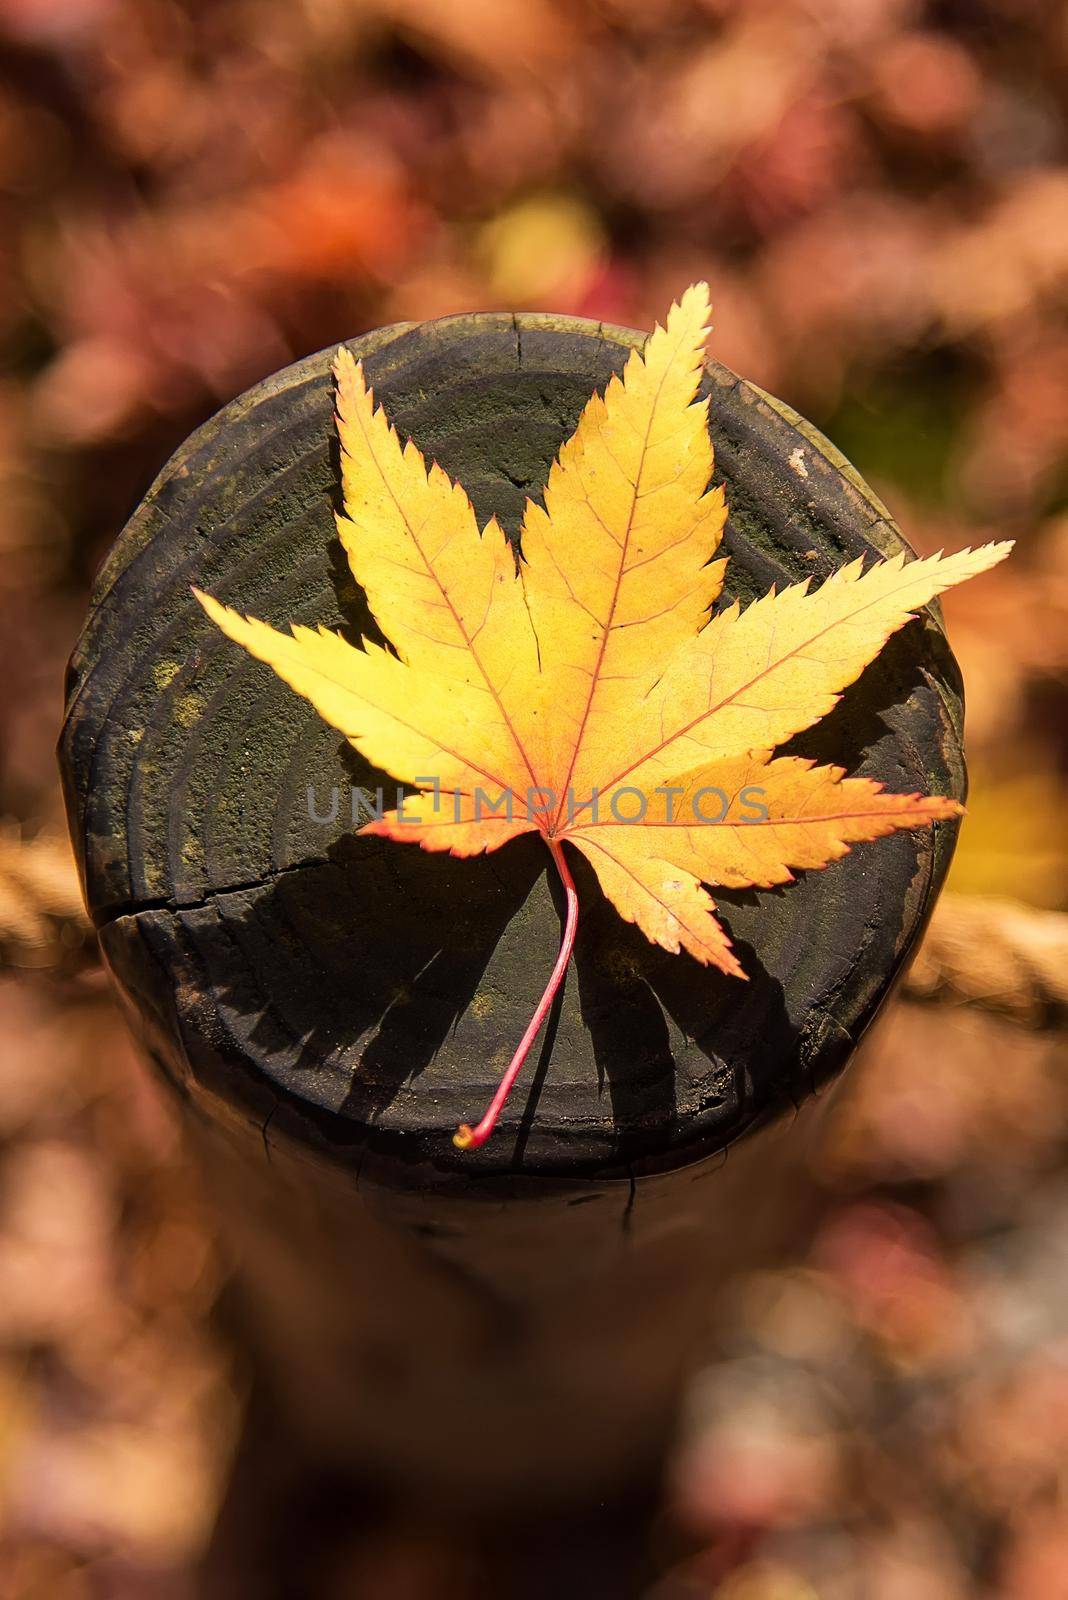 Japanese maple leaf on wood pattern backgroud in autumn season at Kyoto,Japan.